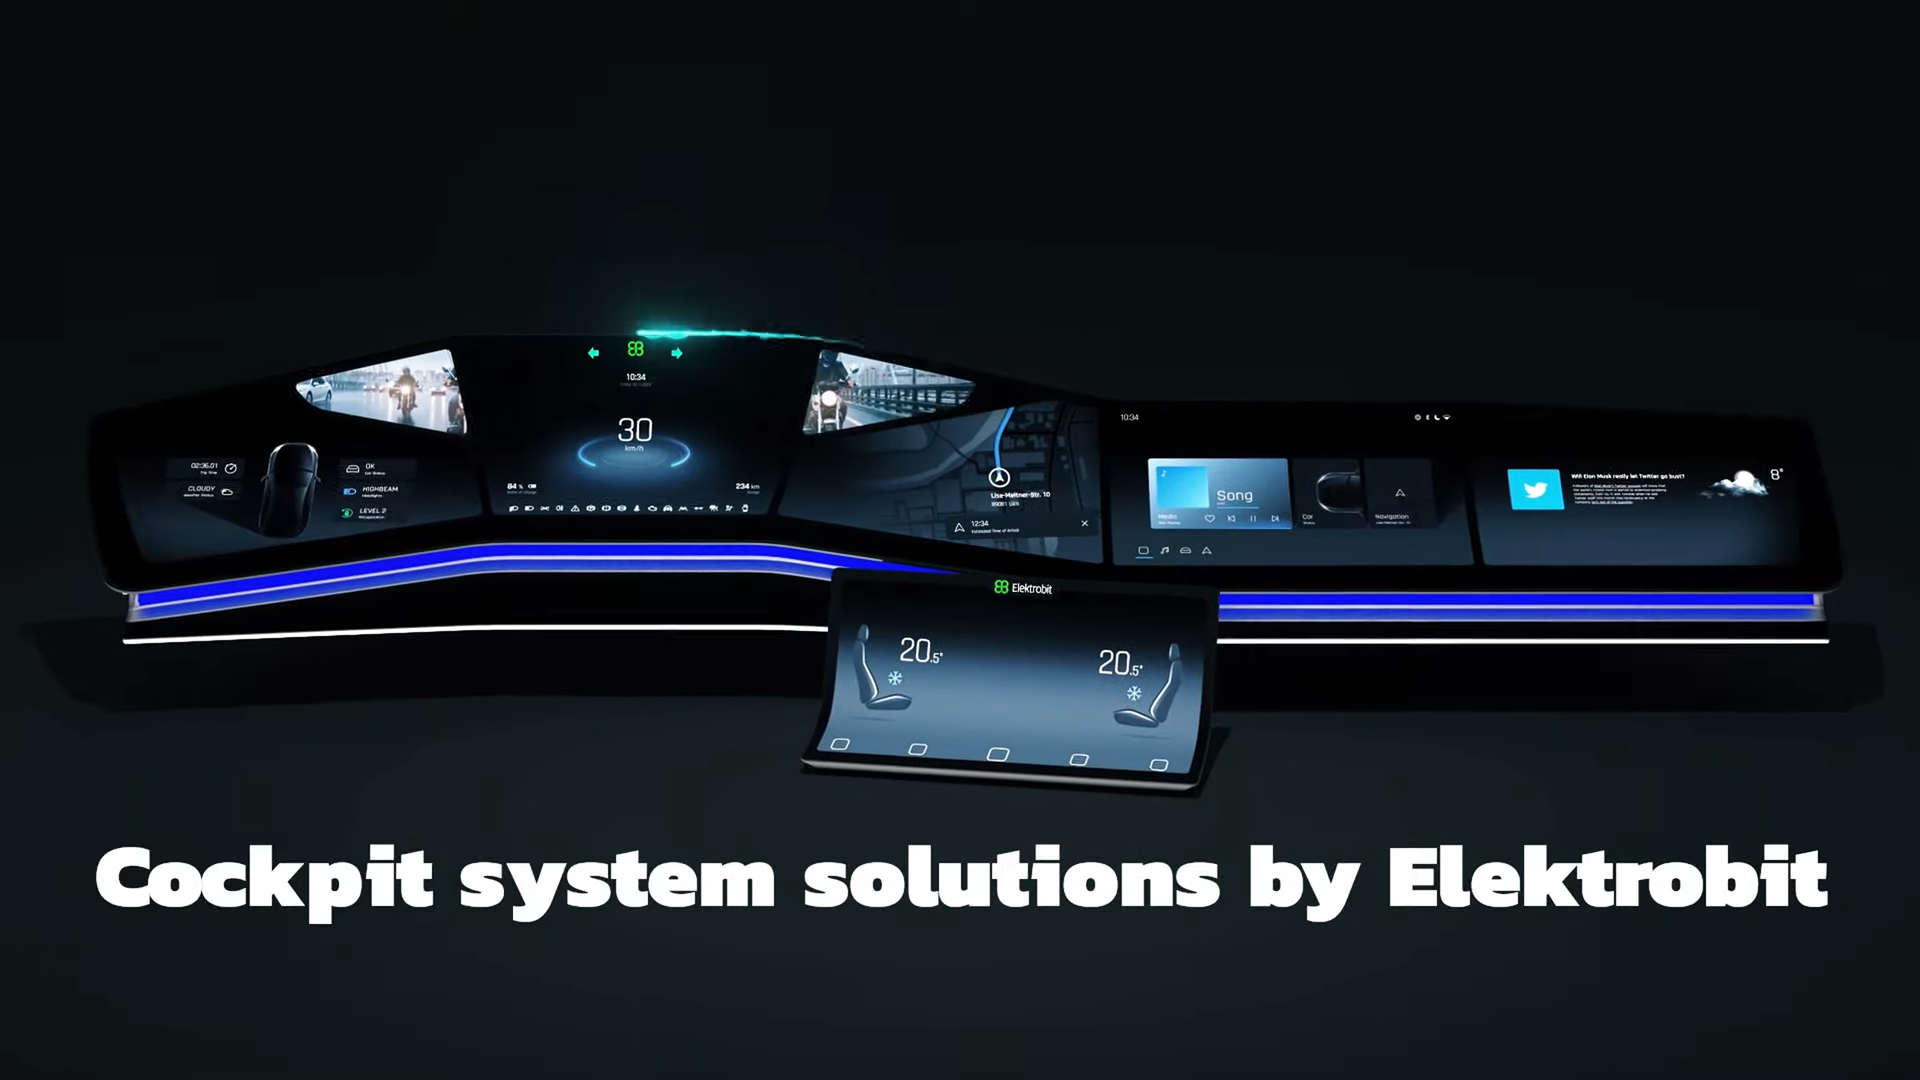 Cockpit system solutions by Elektrobit